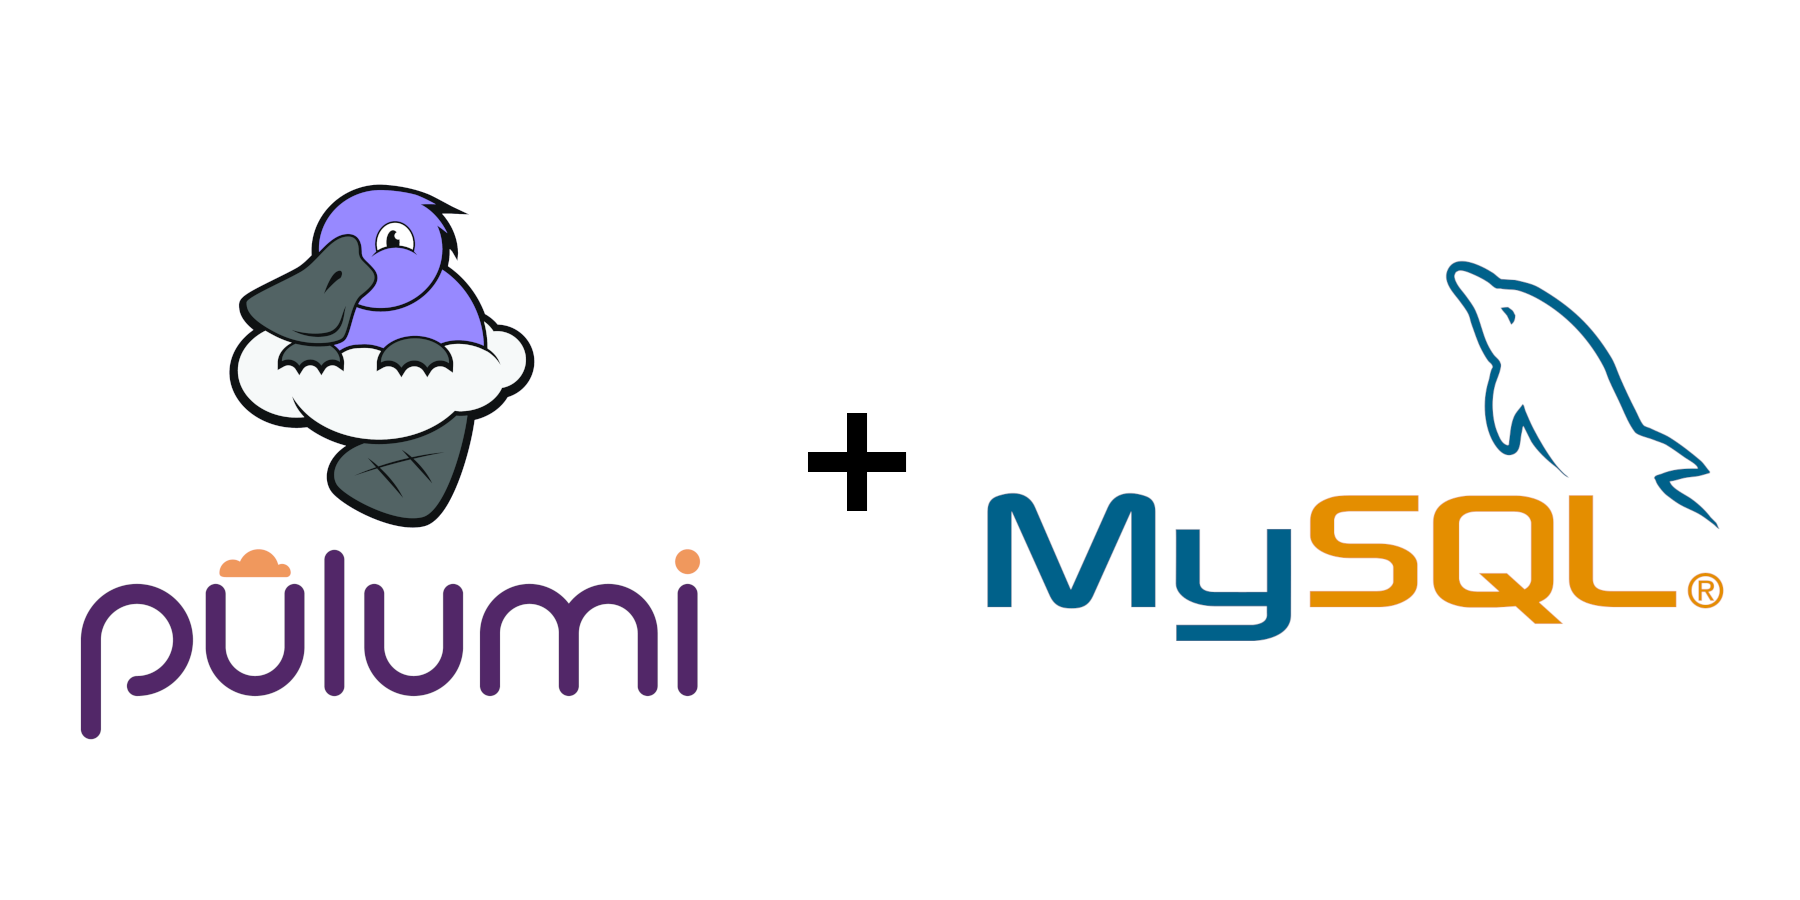 Managing your MySQL databases with Pulumi